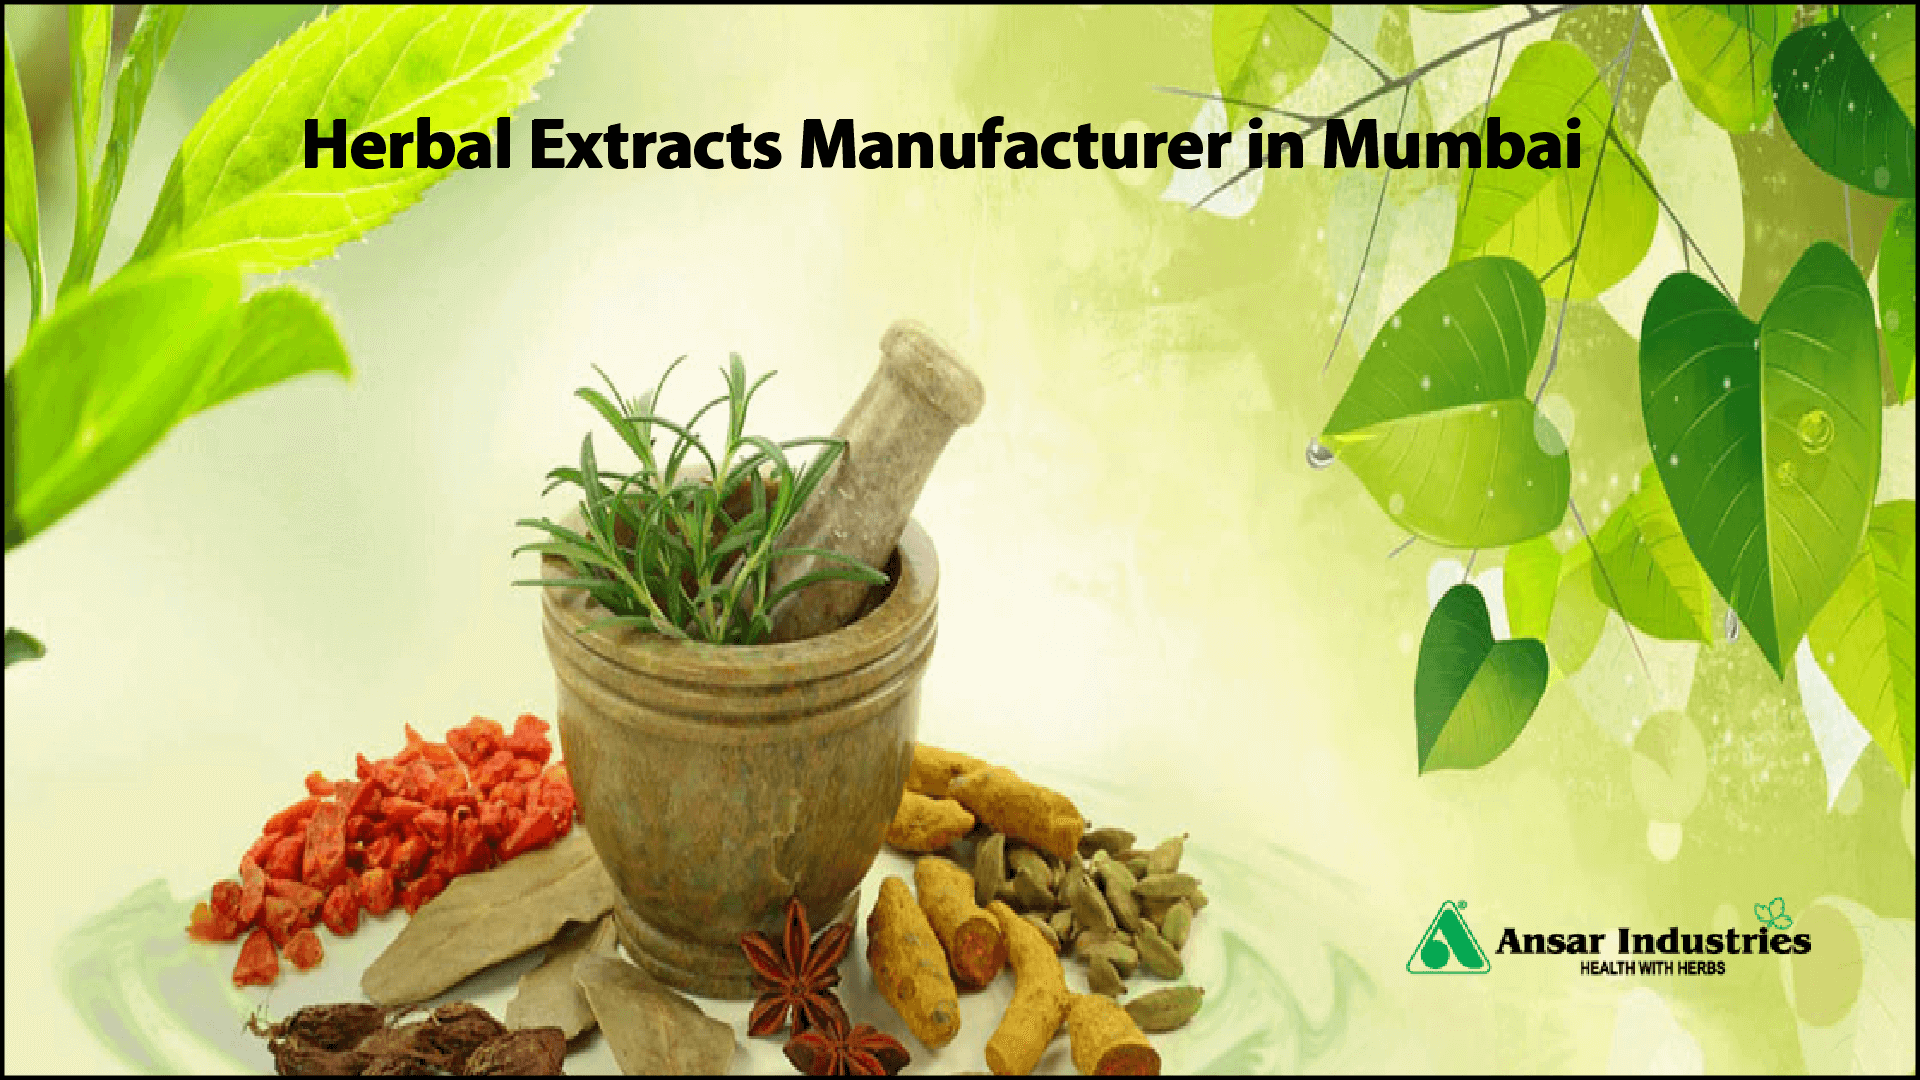 Herbal-Products-Manufacturer-In-Mumbai 
                                